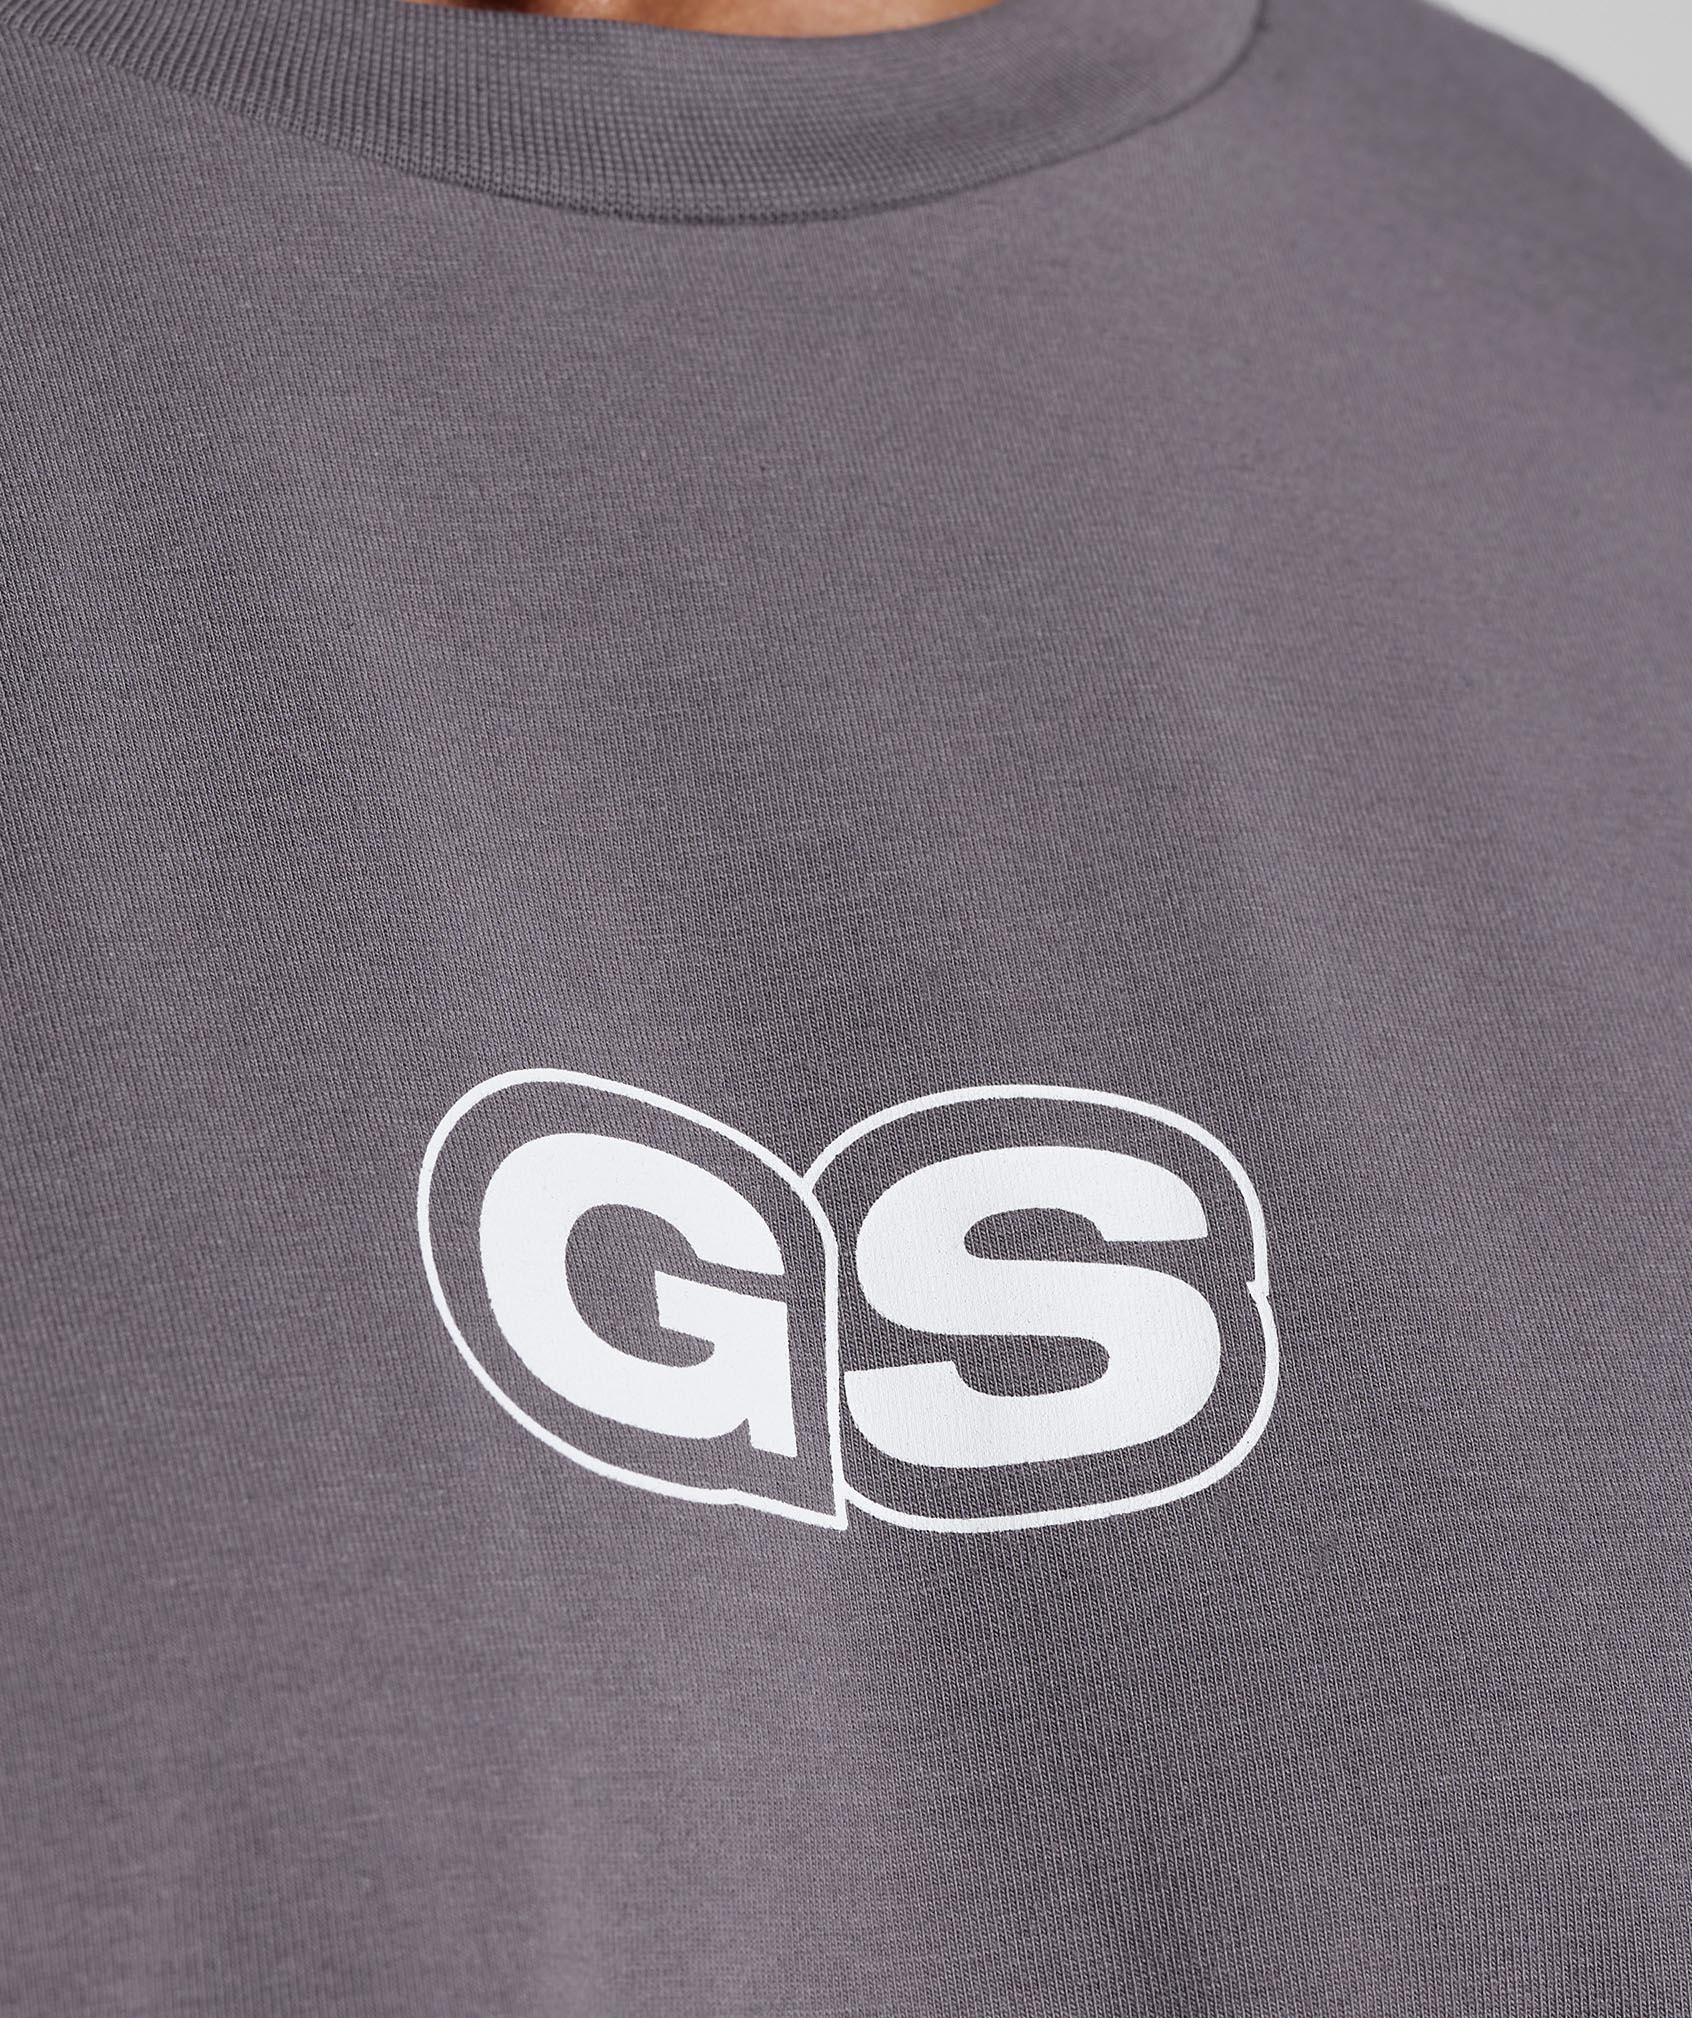 GMSHK Oversized T-Shirt in Titanium Grey - view 5